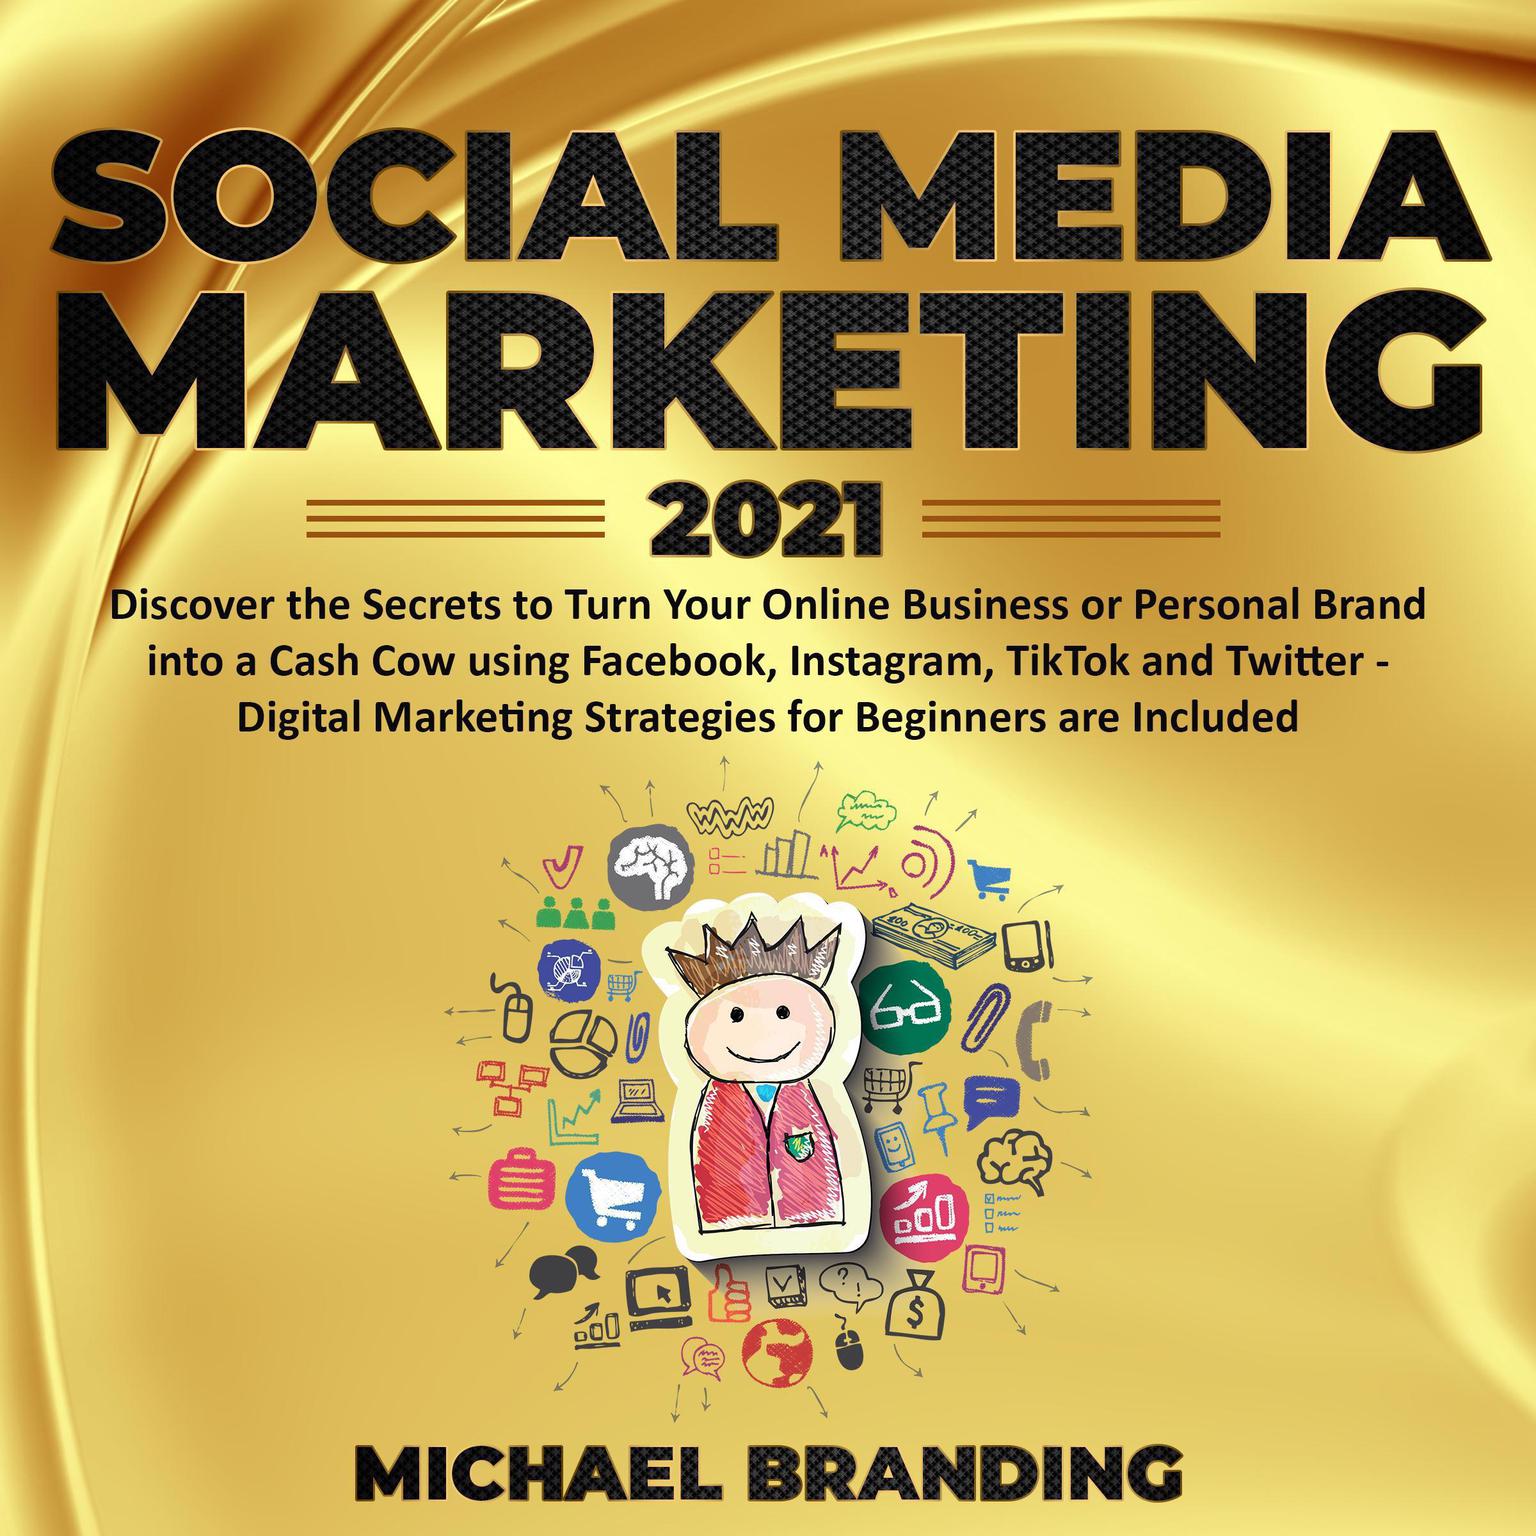 Social Media Marketing 2021 Audiobook, by Michael Branding